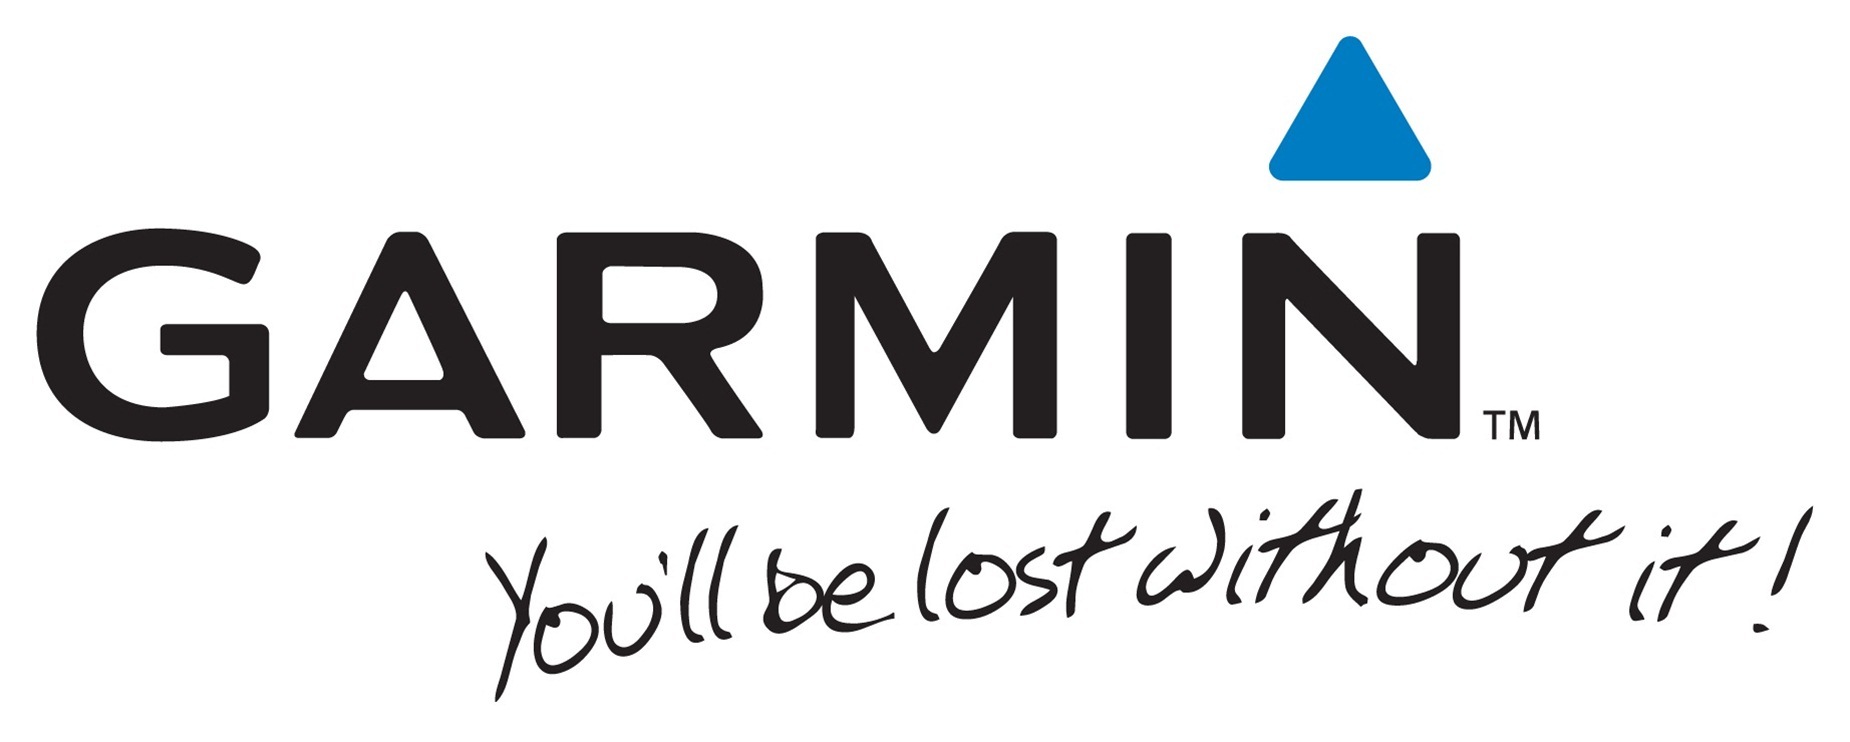 Garmin Logo Wallpaper Skyway Sportfishing